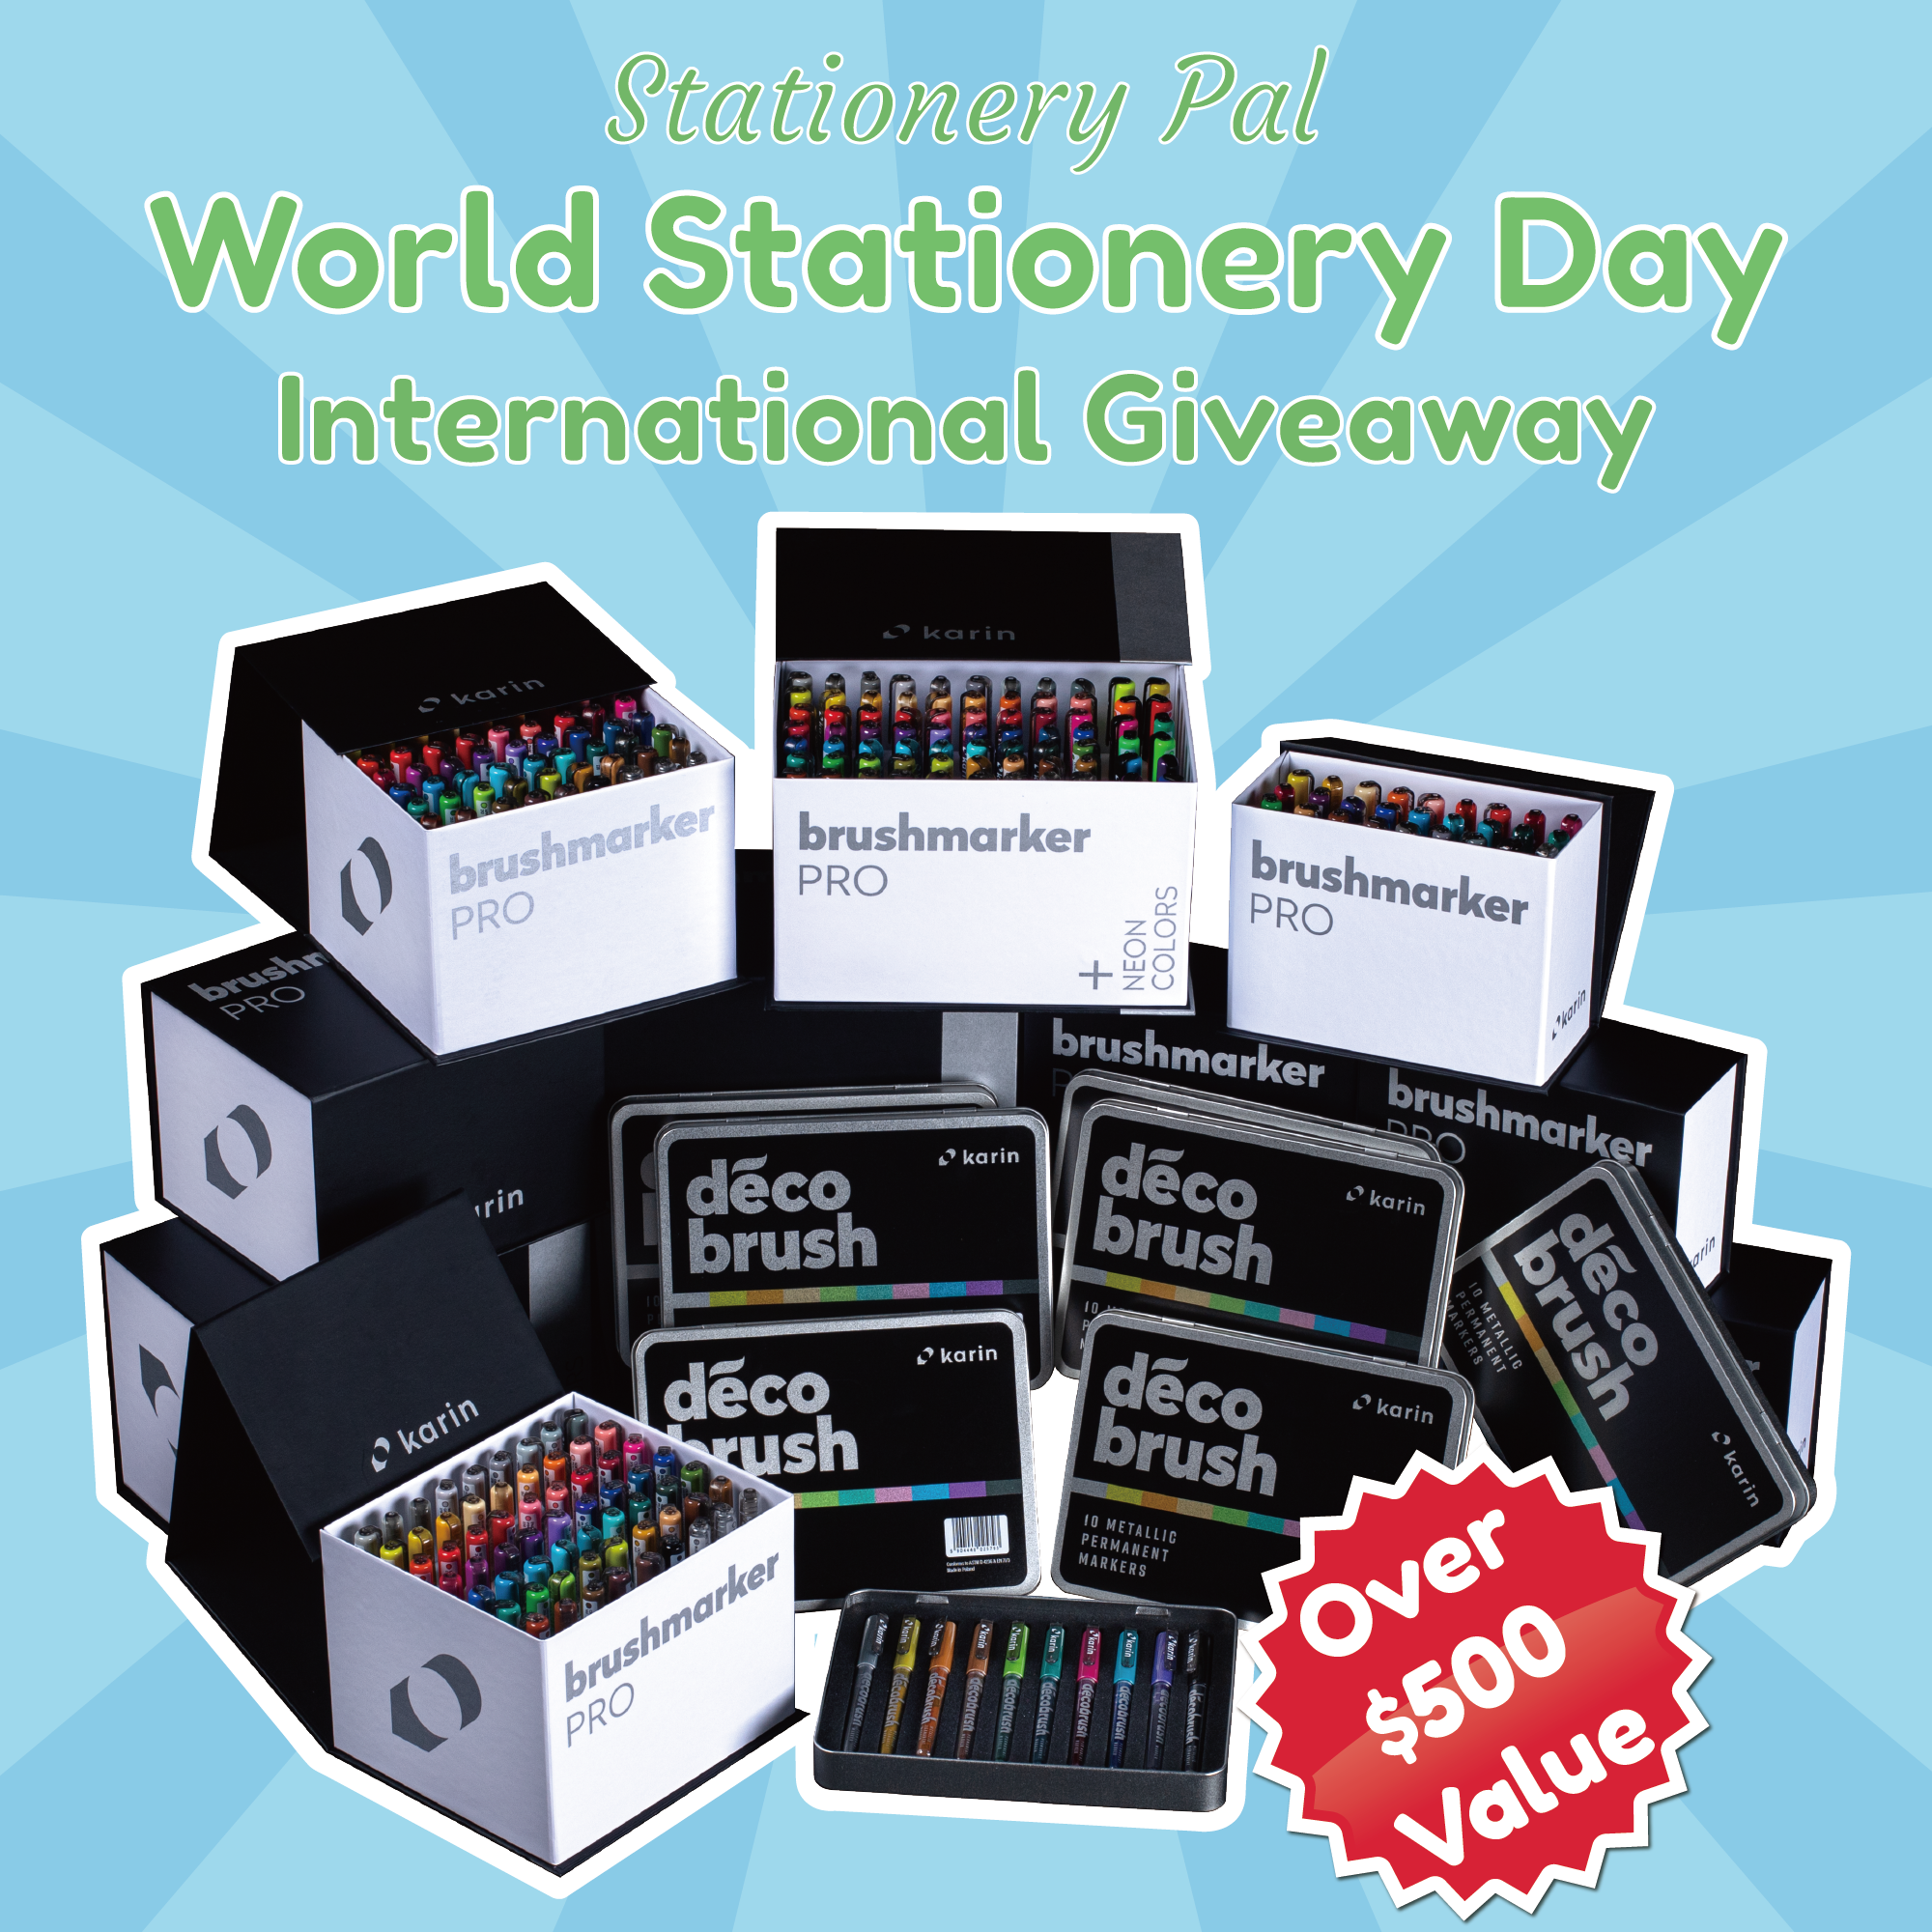 World Stationery Day Giveaway 21APR - 11 Karin BrushmarkerPro sets on Instagram @stationerypal